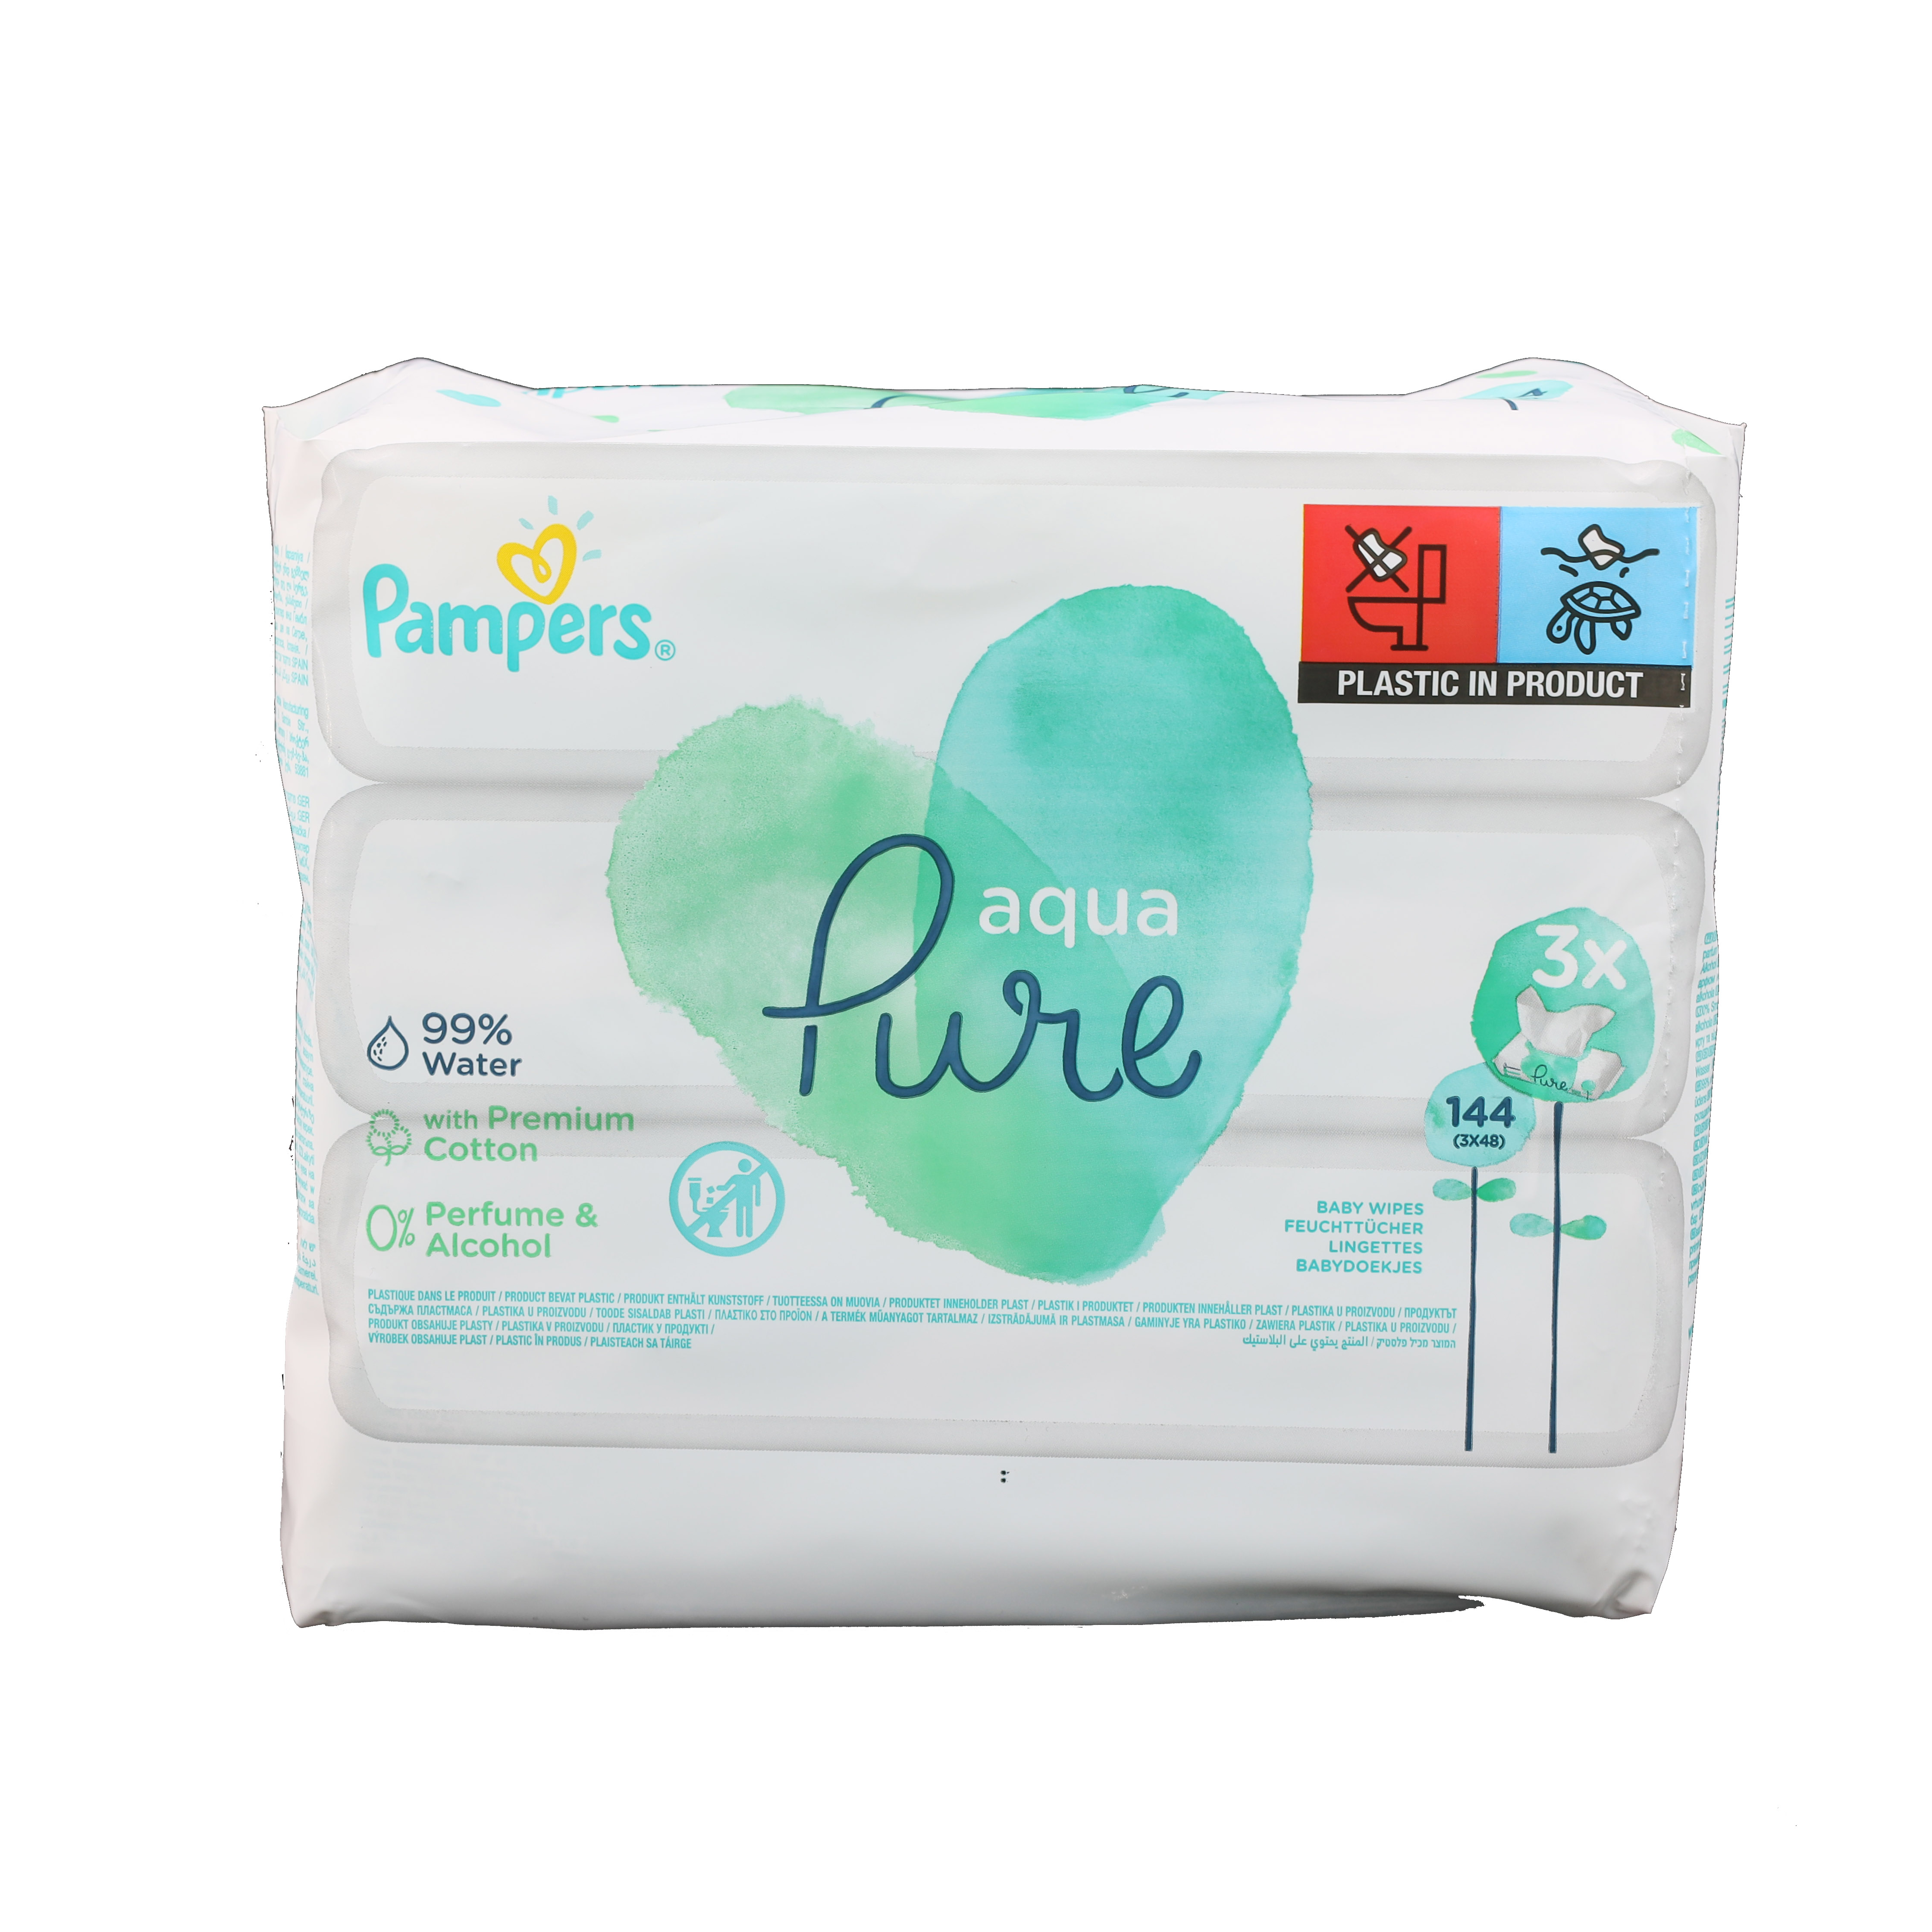 Pampers Pure Aqua Feuchttücher für Babys 3x48Stück